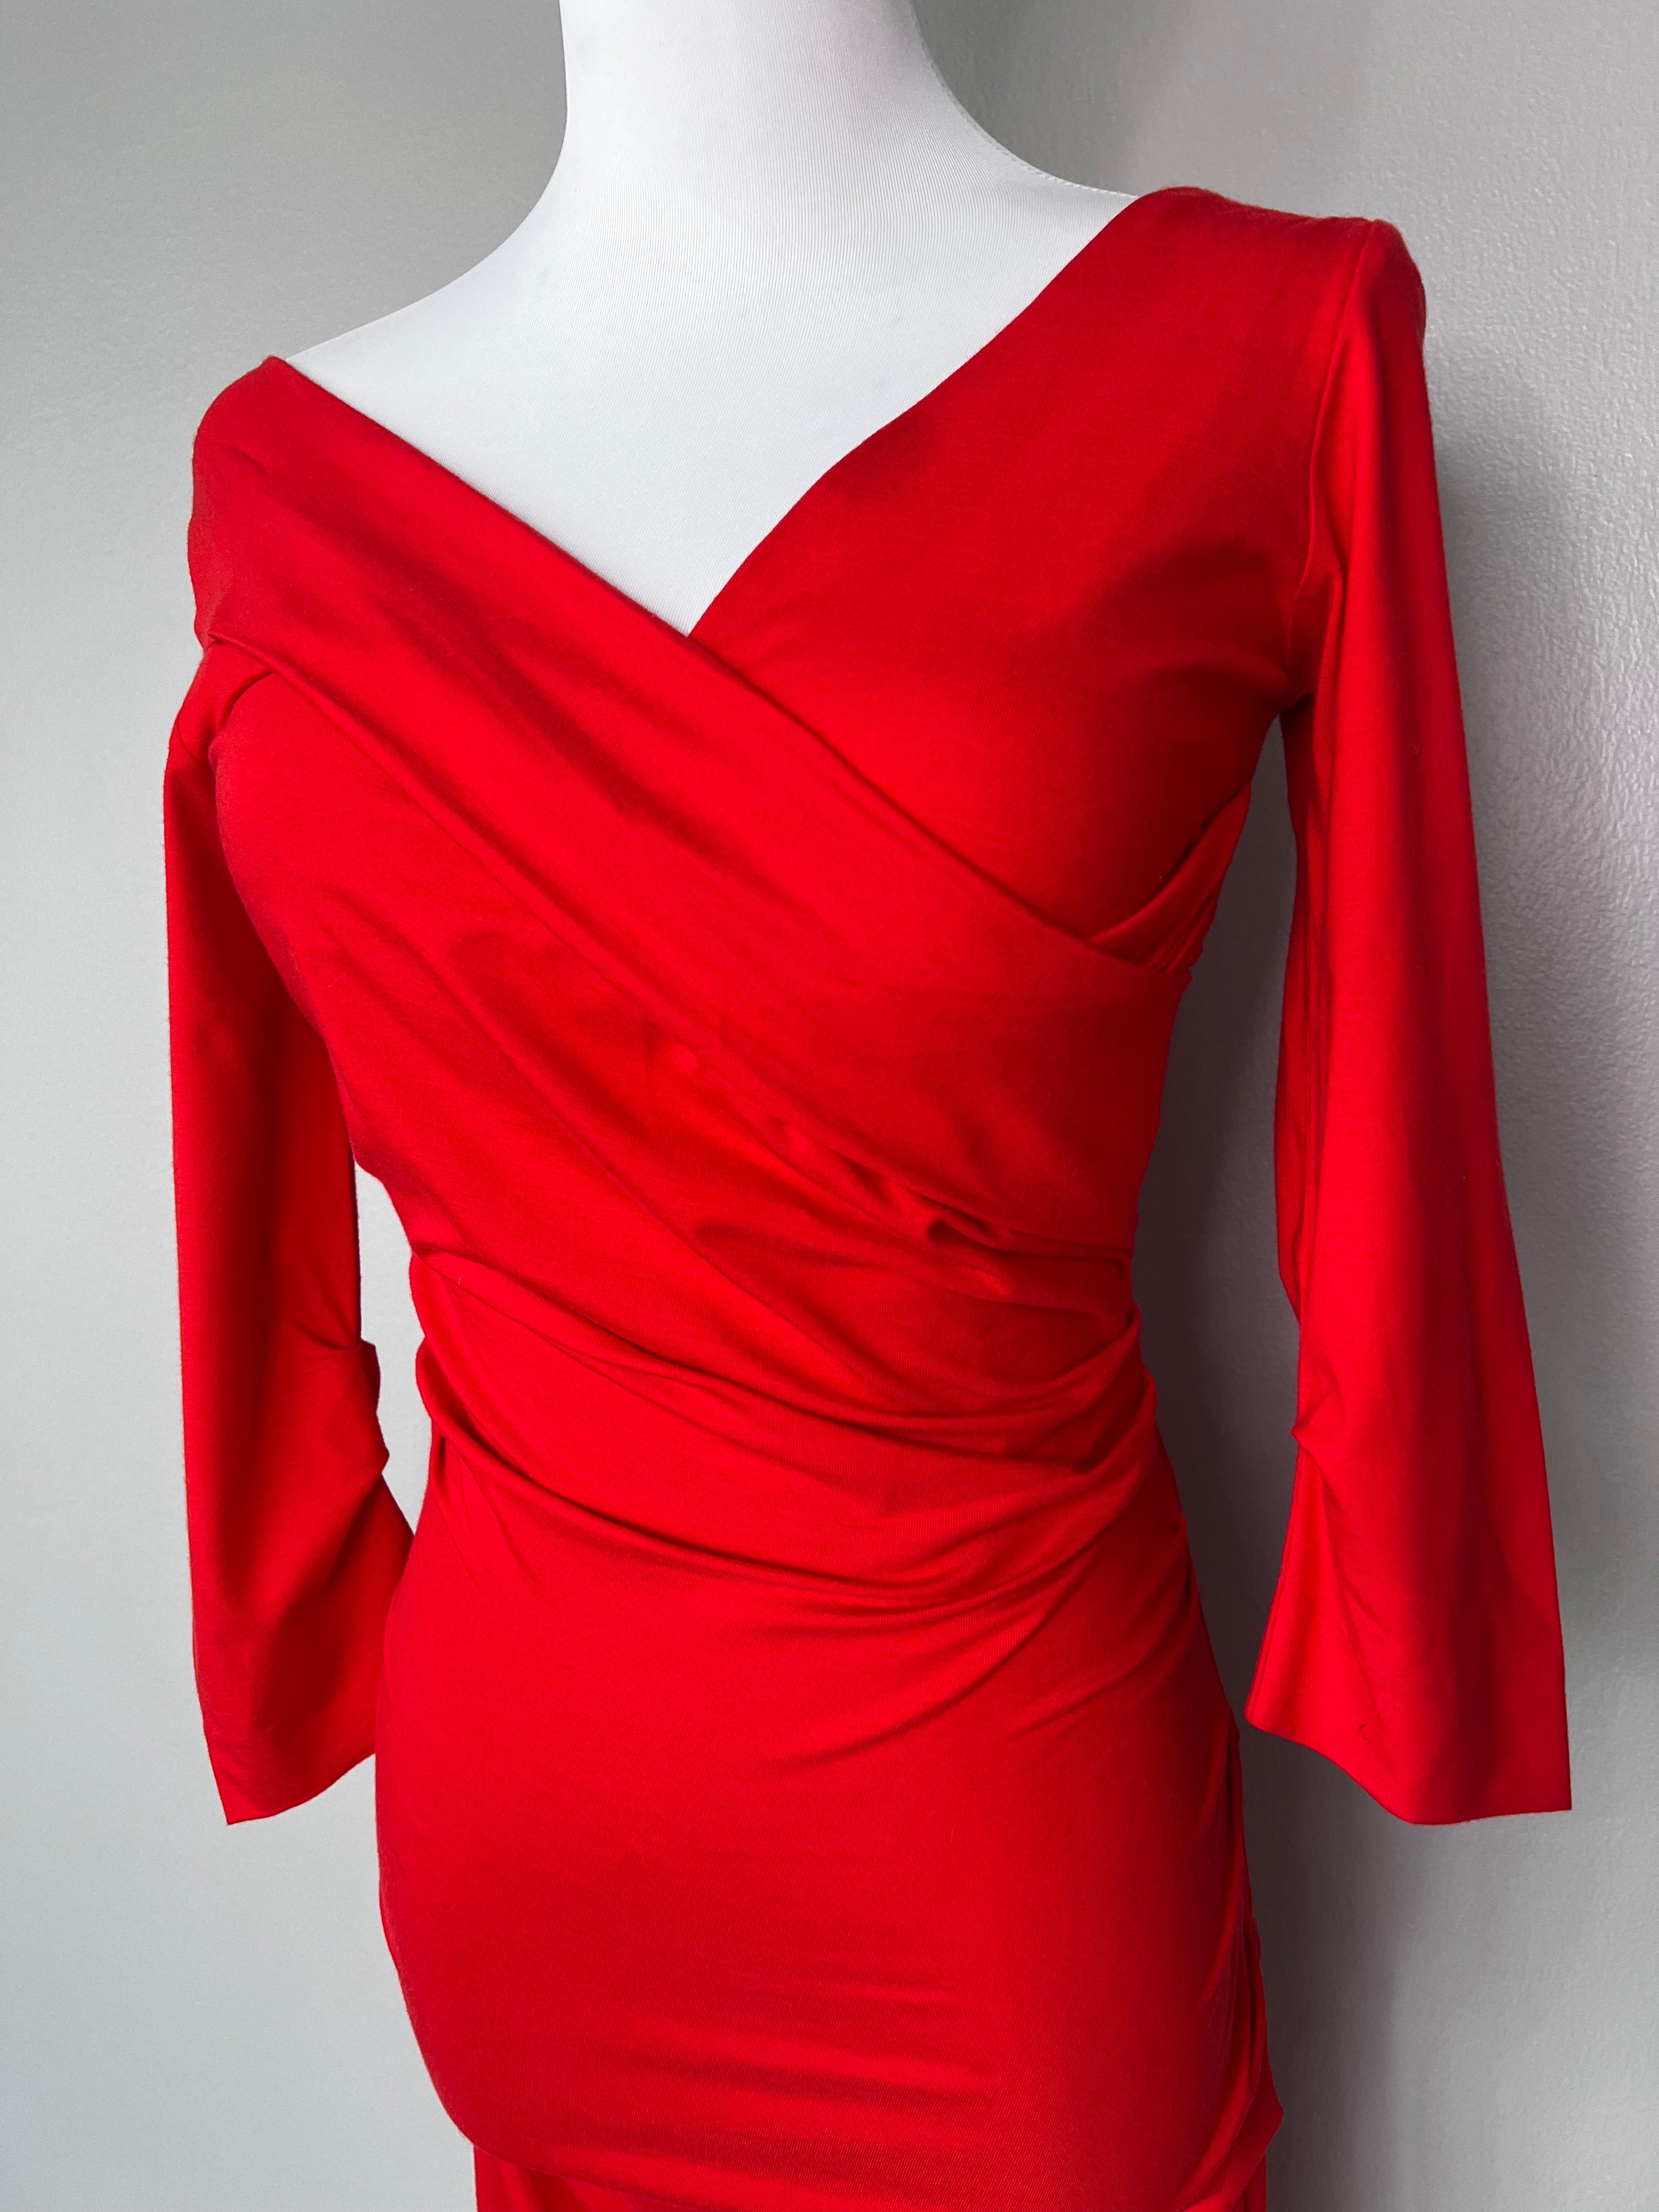 Longsleeve cotton slight off-the-shoulder red dress with scrunch effect on either side. - DIANE VON FURSTENBERG